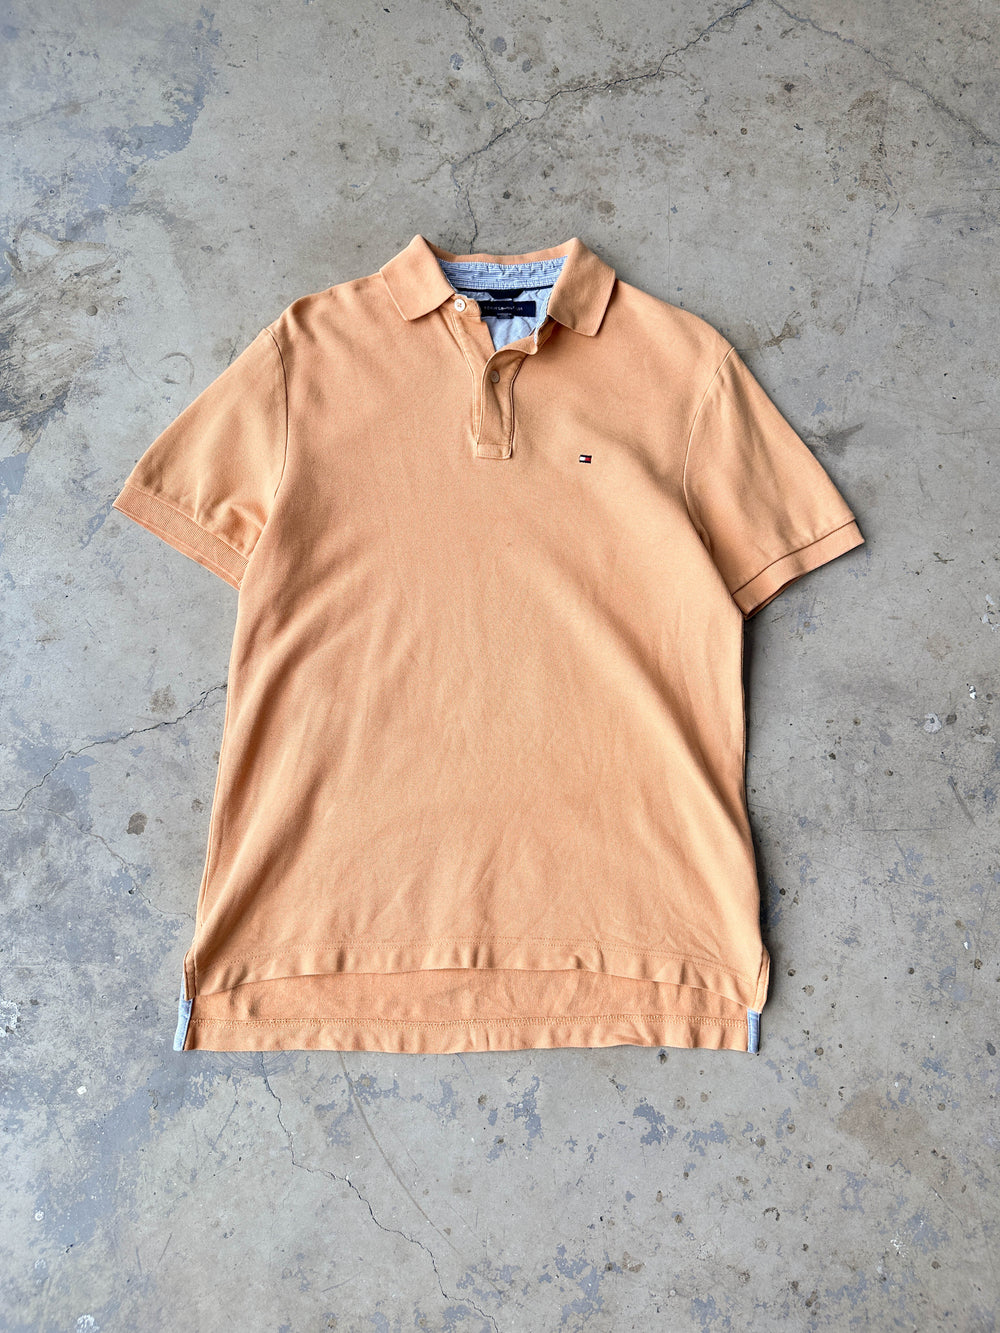 Vintage Tommy Hilfiger polo shirt